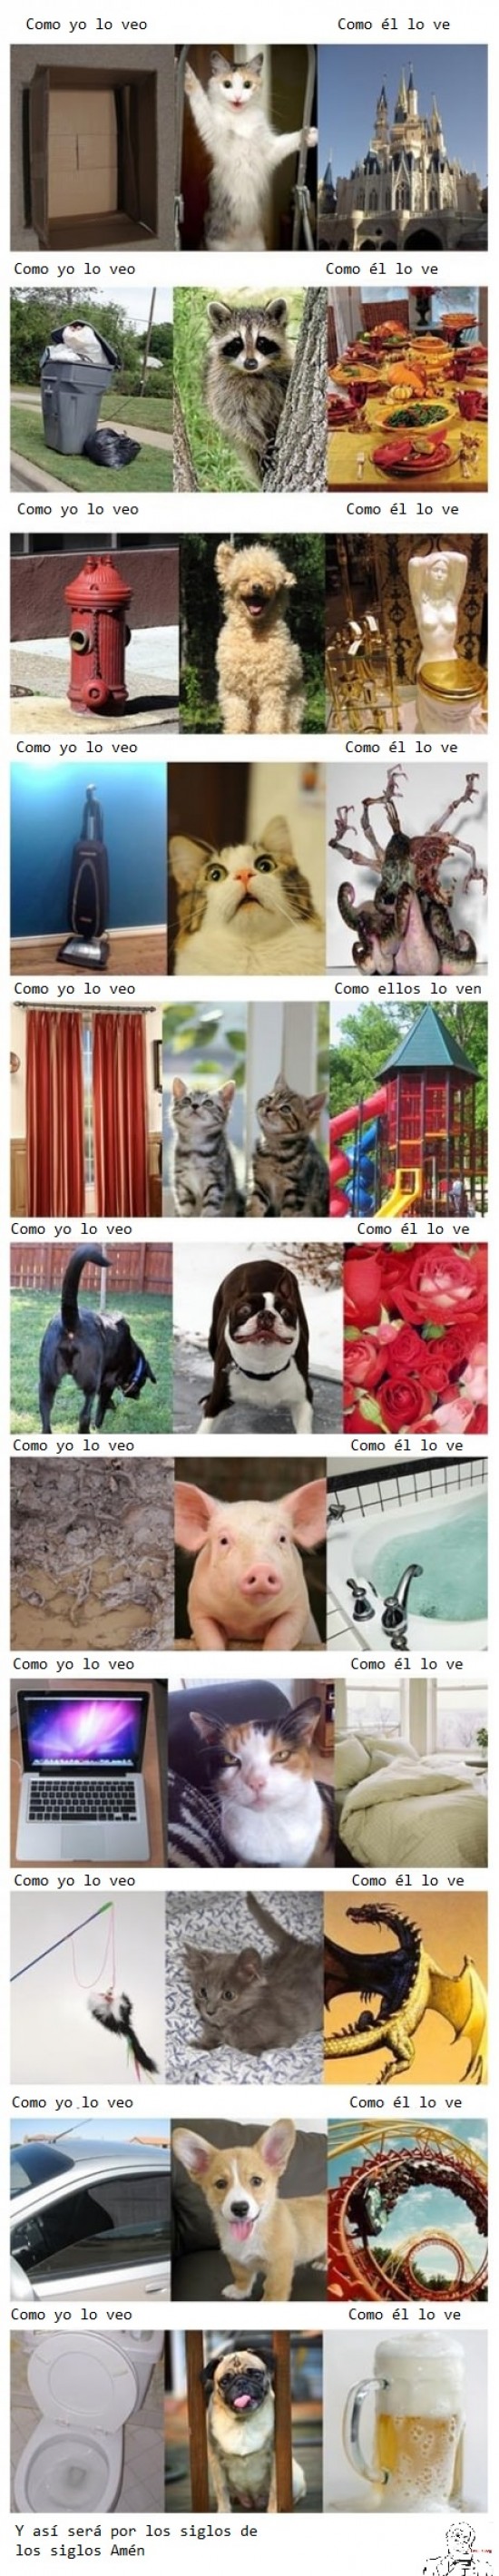 gatos,perros,primera viñeta publicada,true story